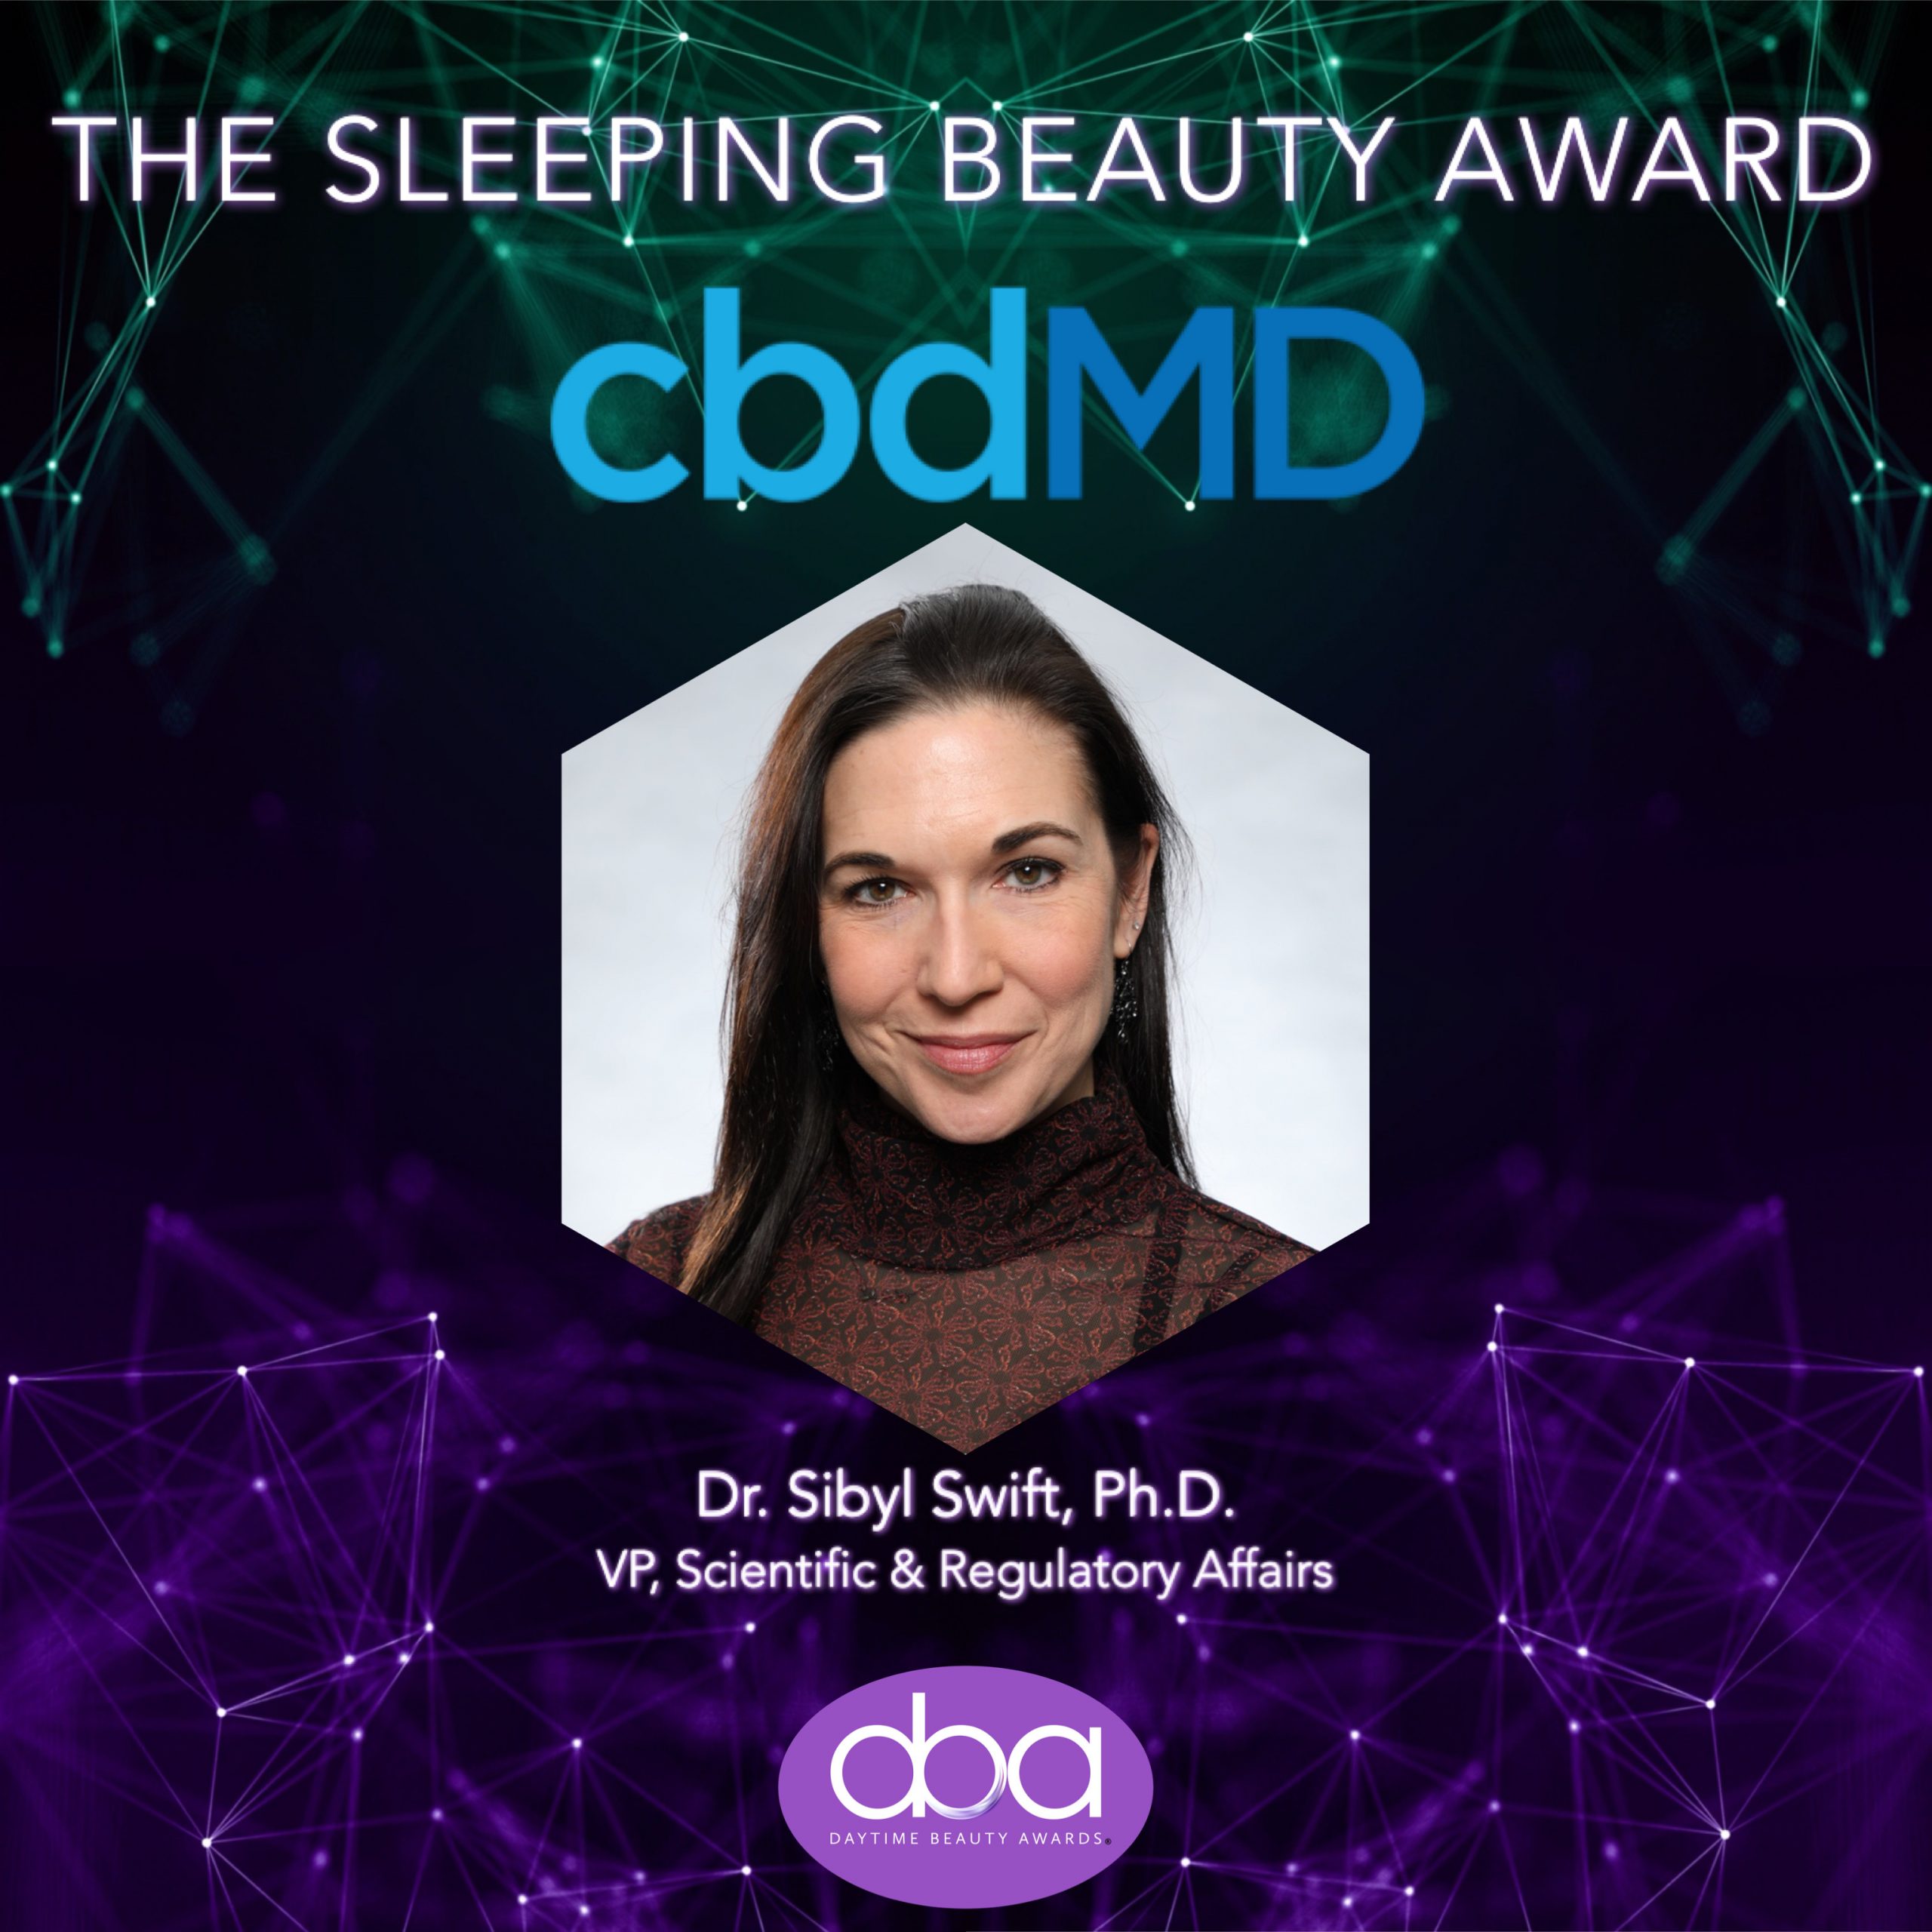 cbdmd, Daytime Beauty Awards, Dr. Sybil Swift